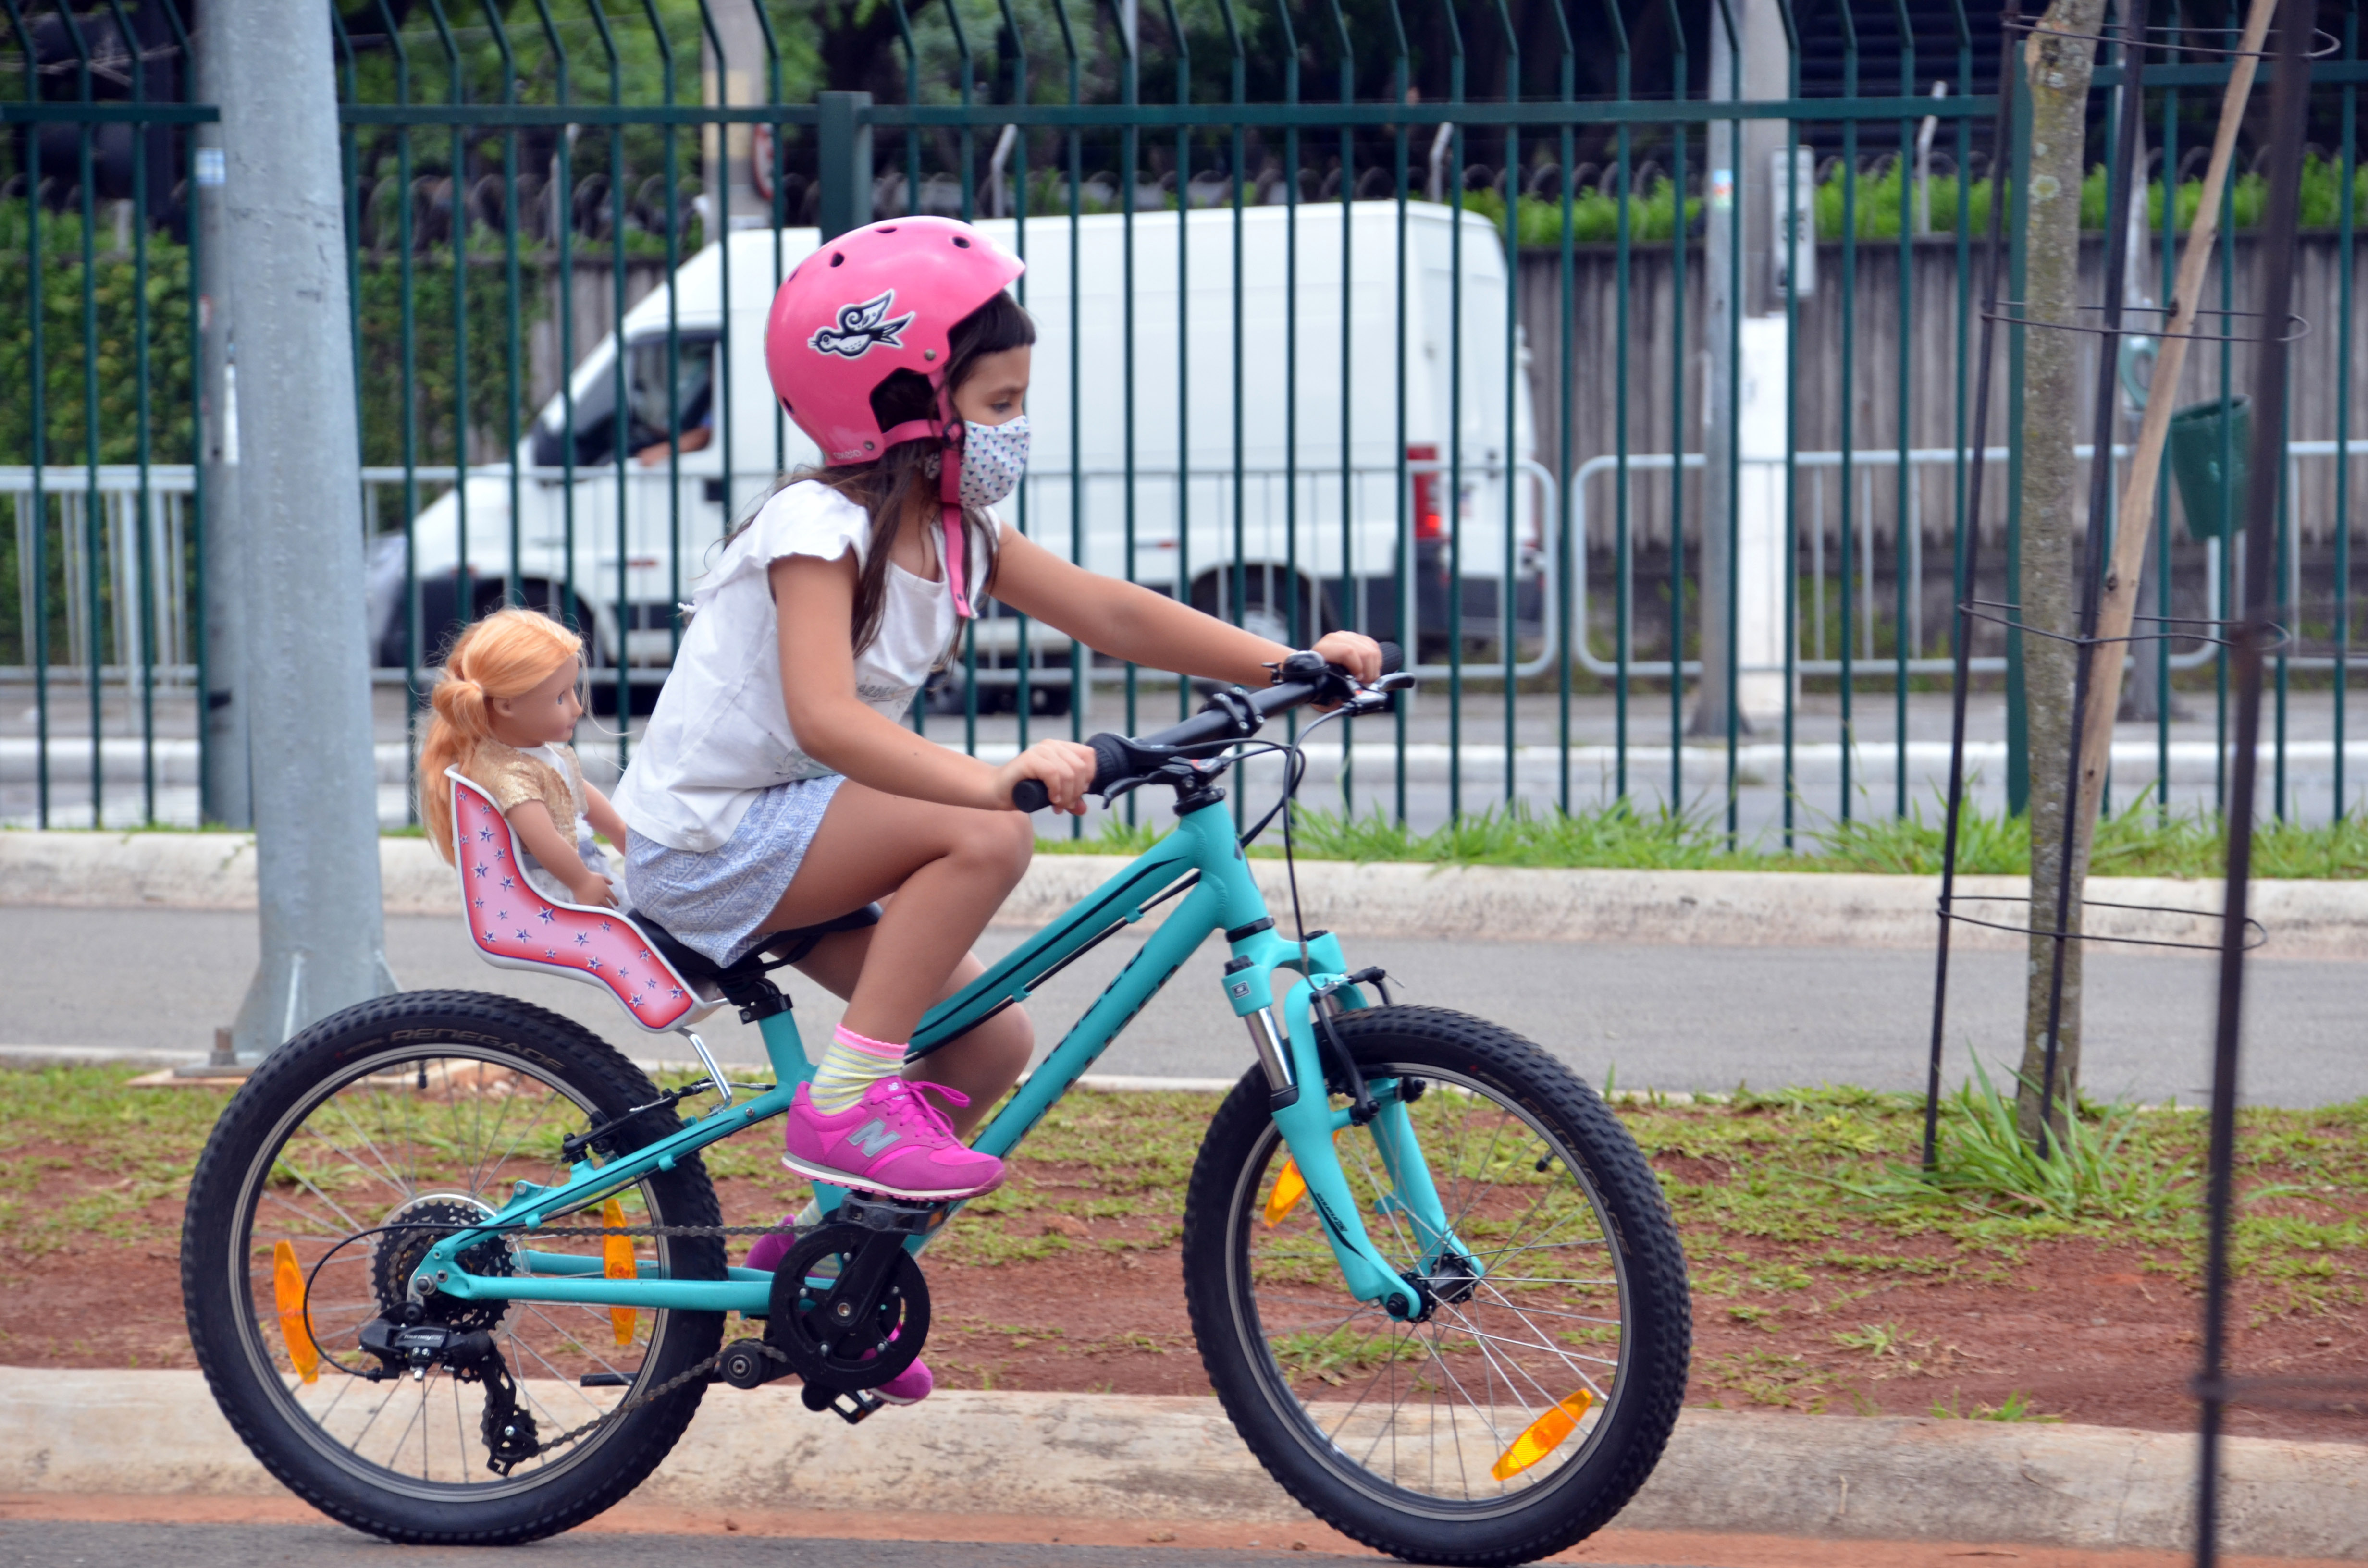 Menina anda de bicicleta no Parque das Bicicletas usando máscara. Na cadeira de trás da bicicleta, a menina leva uma boneca.